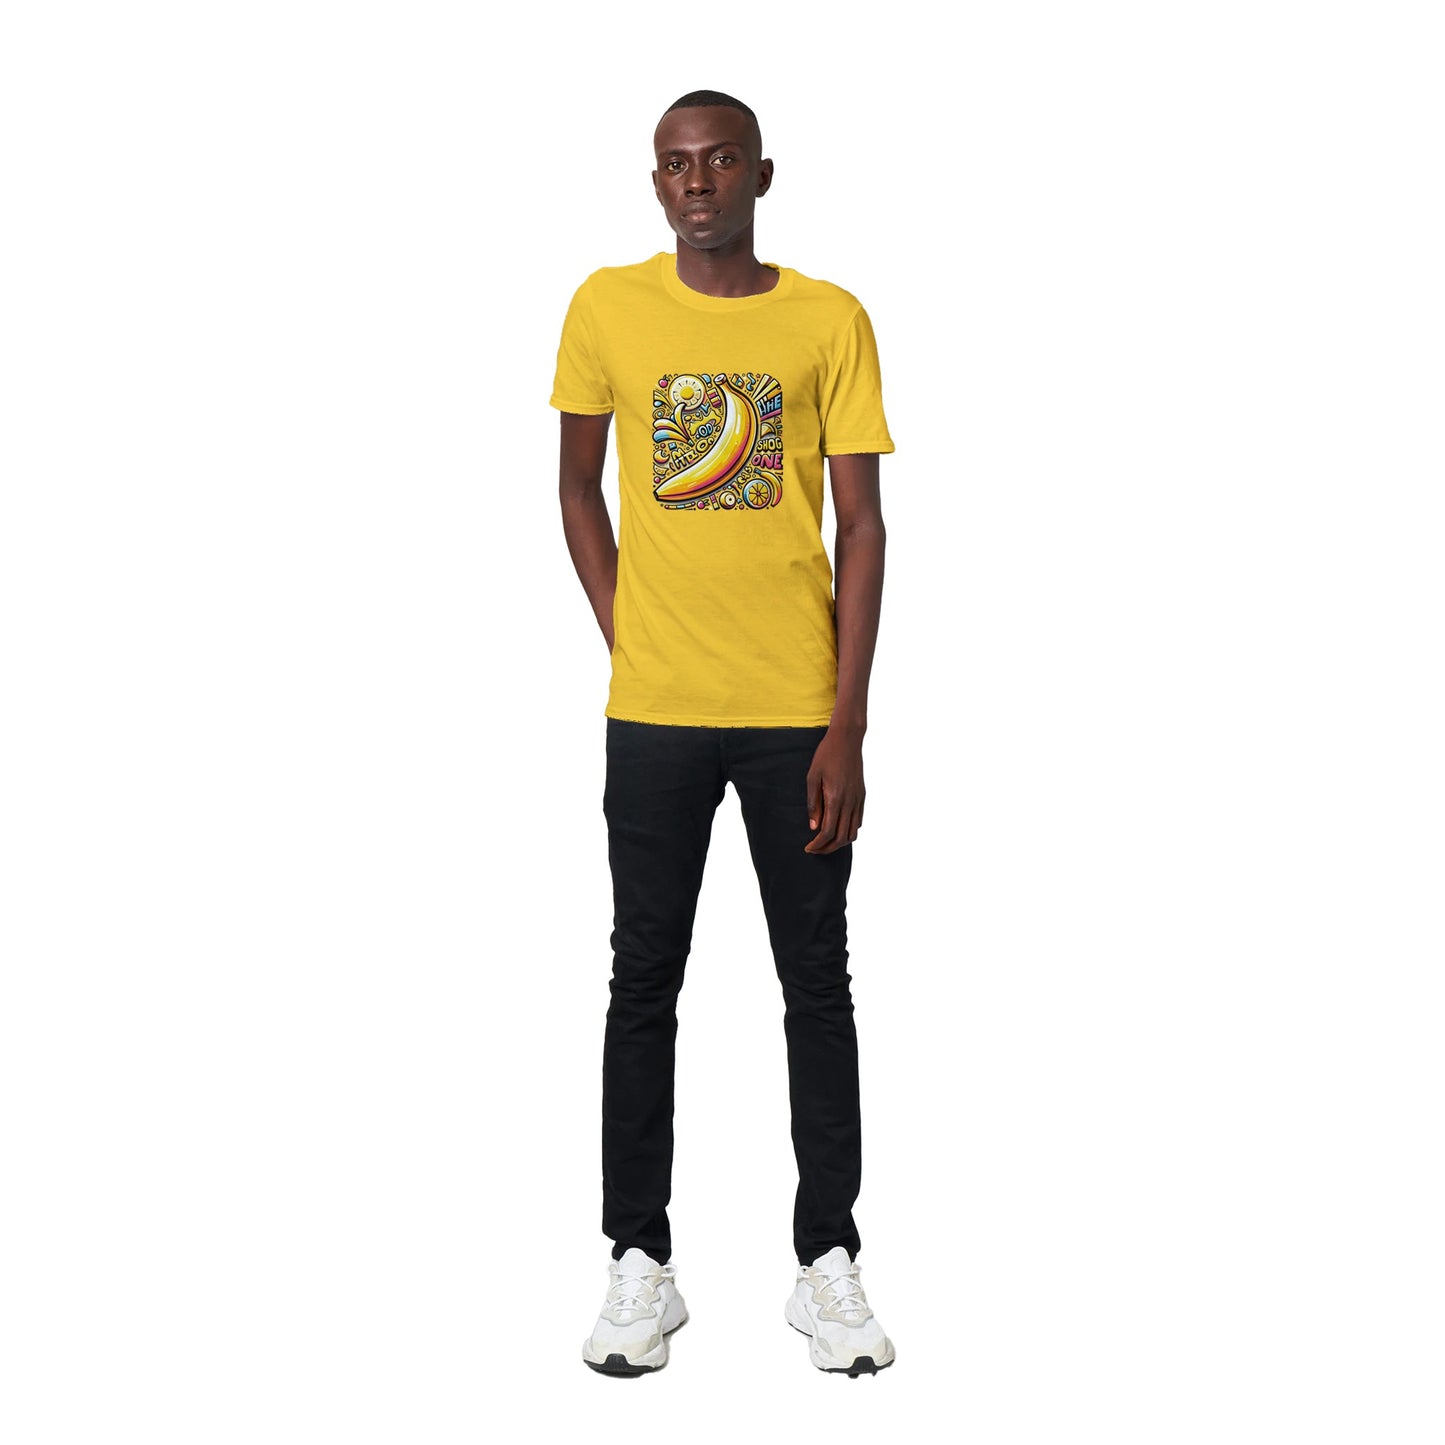 Banana Delight T-Shirt - 100% soft, breathable cotton - BeinCart